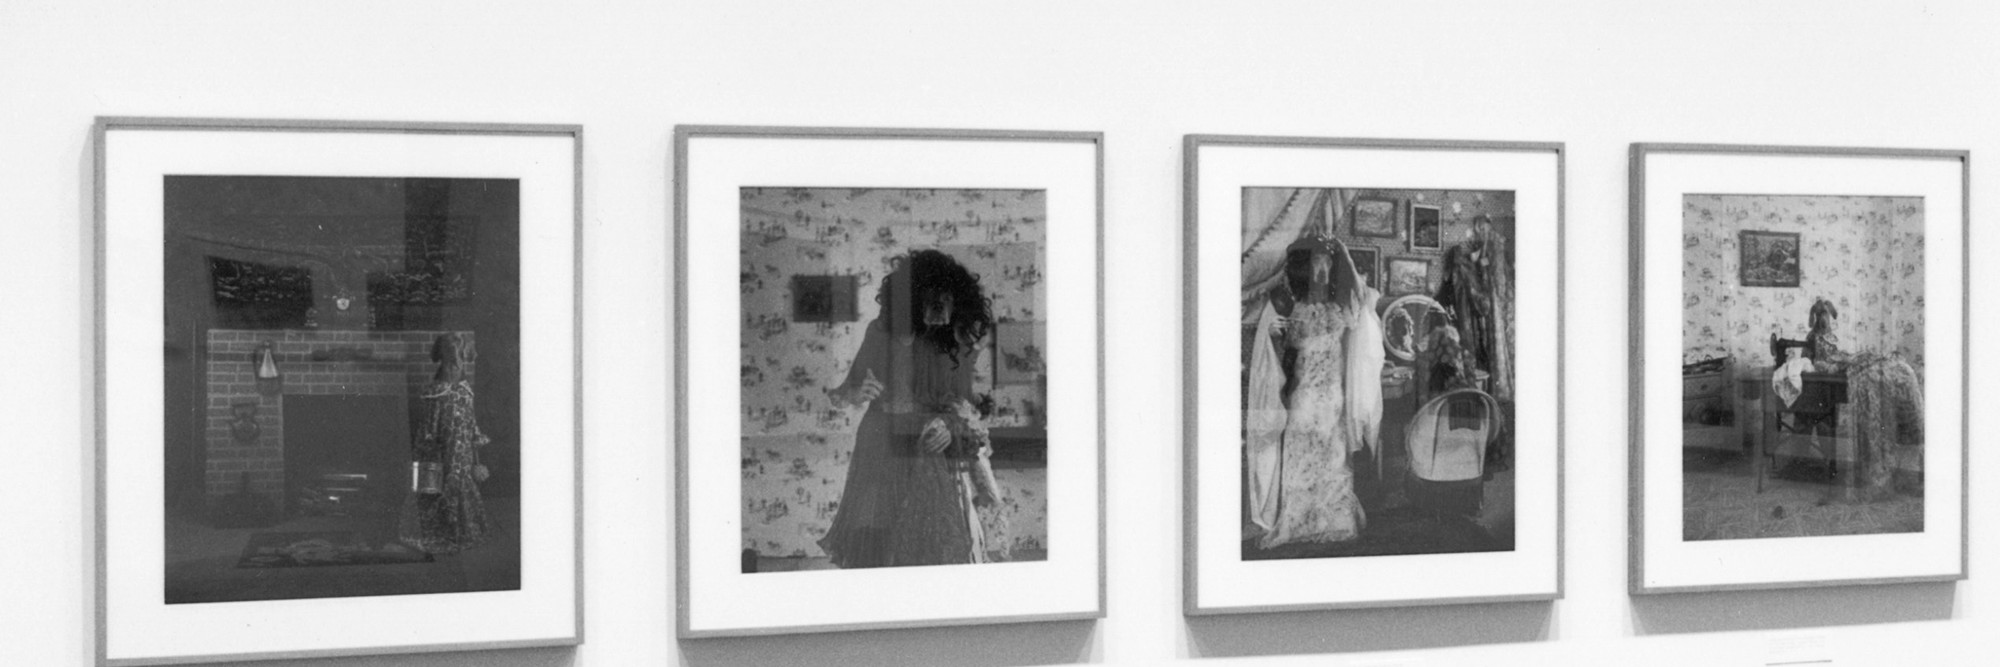 William Wegman’s Cinderella | MoMA